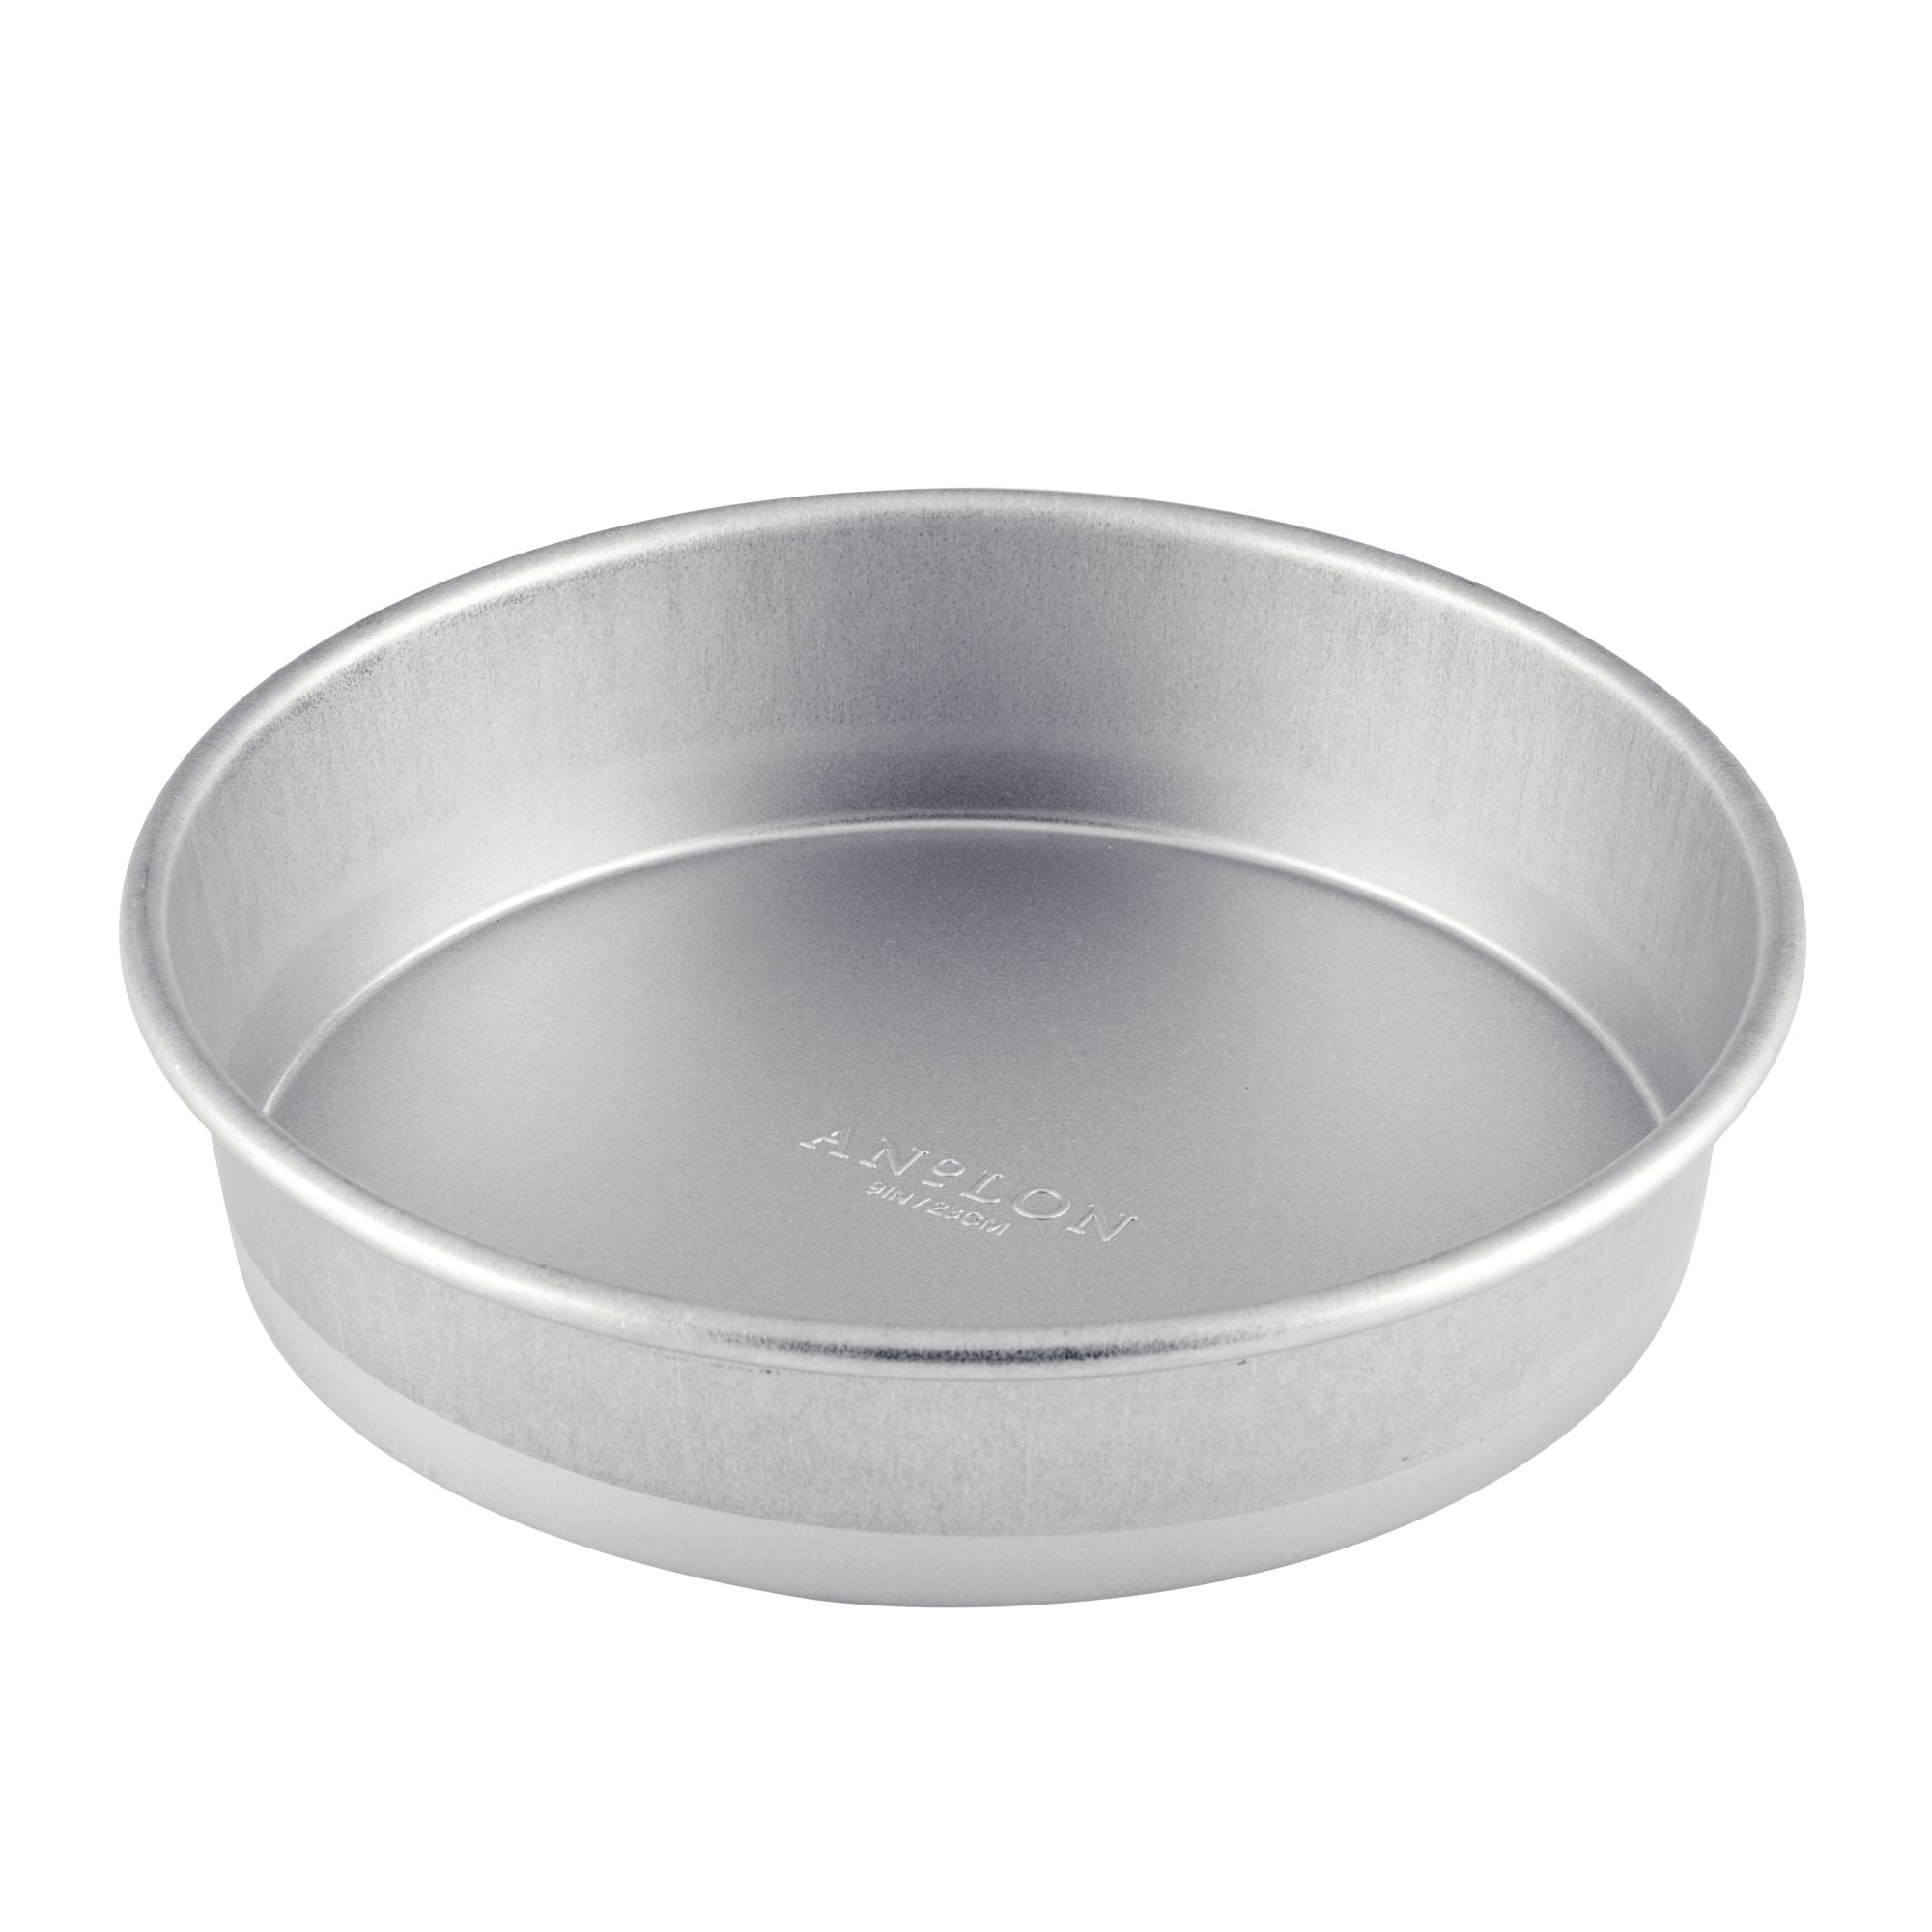 Amazon.com: Wilton Aluminum Round Cake Pan, 8 x 3-Inch, Silver: Round Cake  Pans: Home & Kitchen